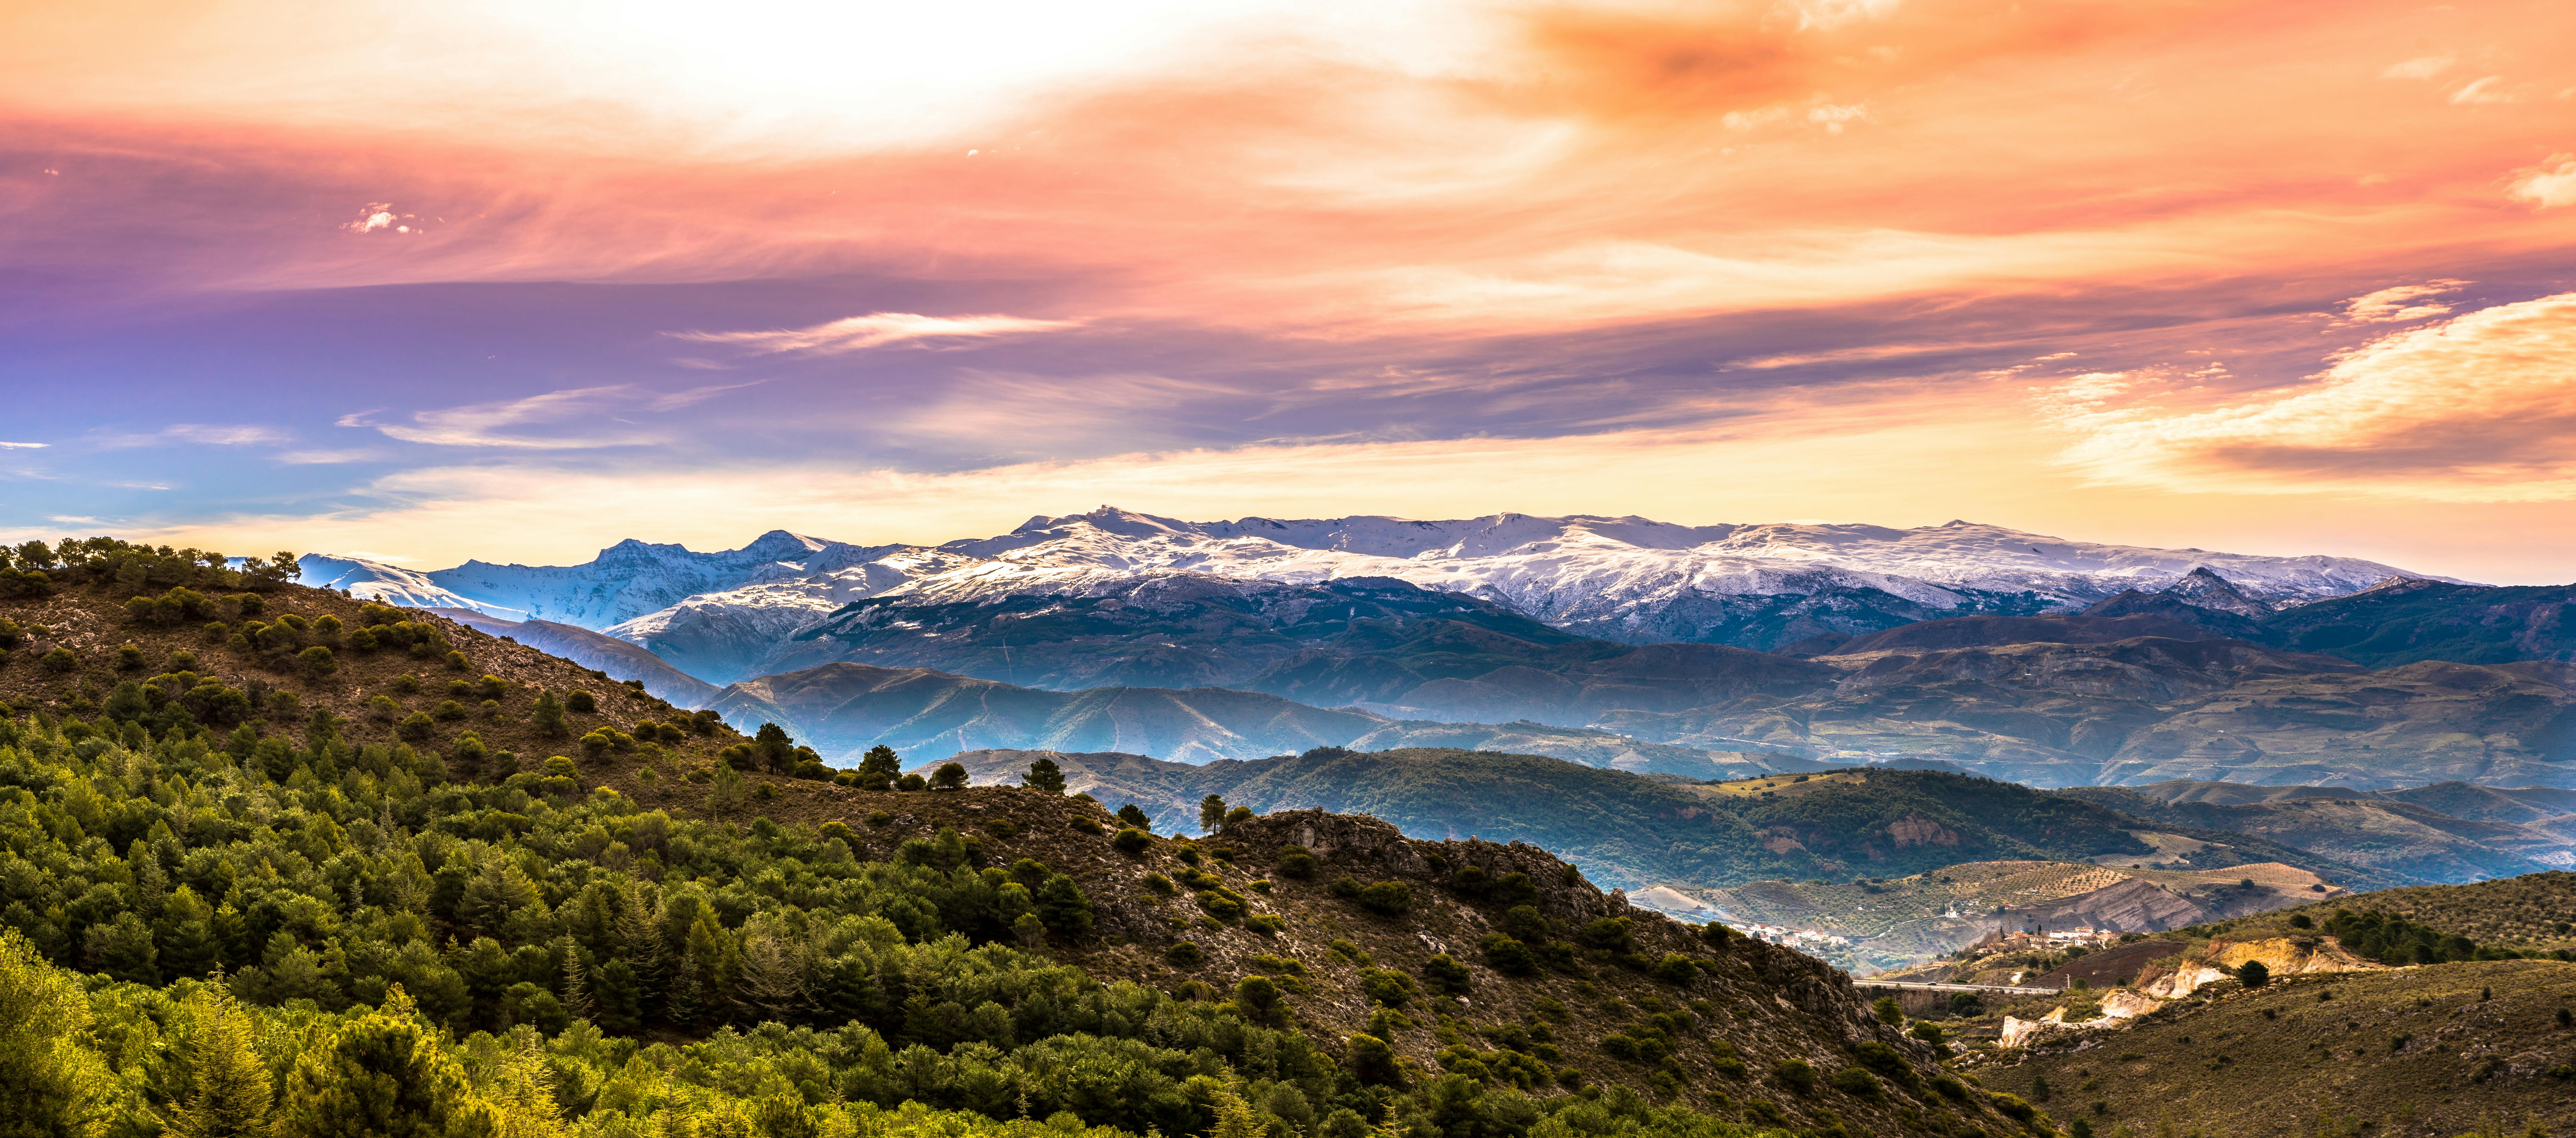 Sierra Nevada-dagtour met gids vanuit Granada